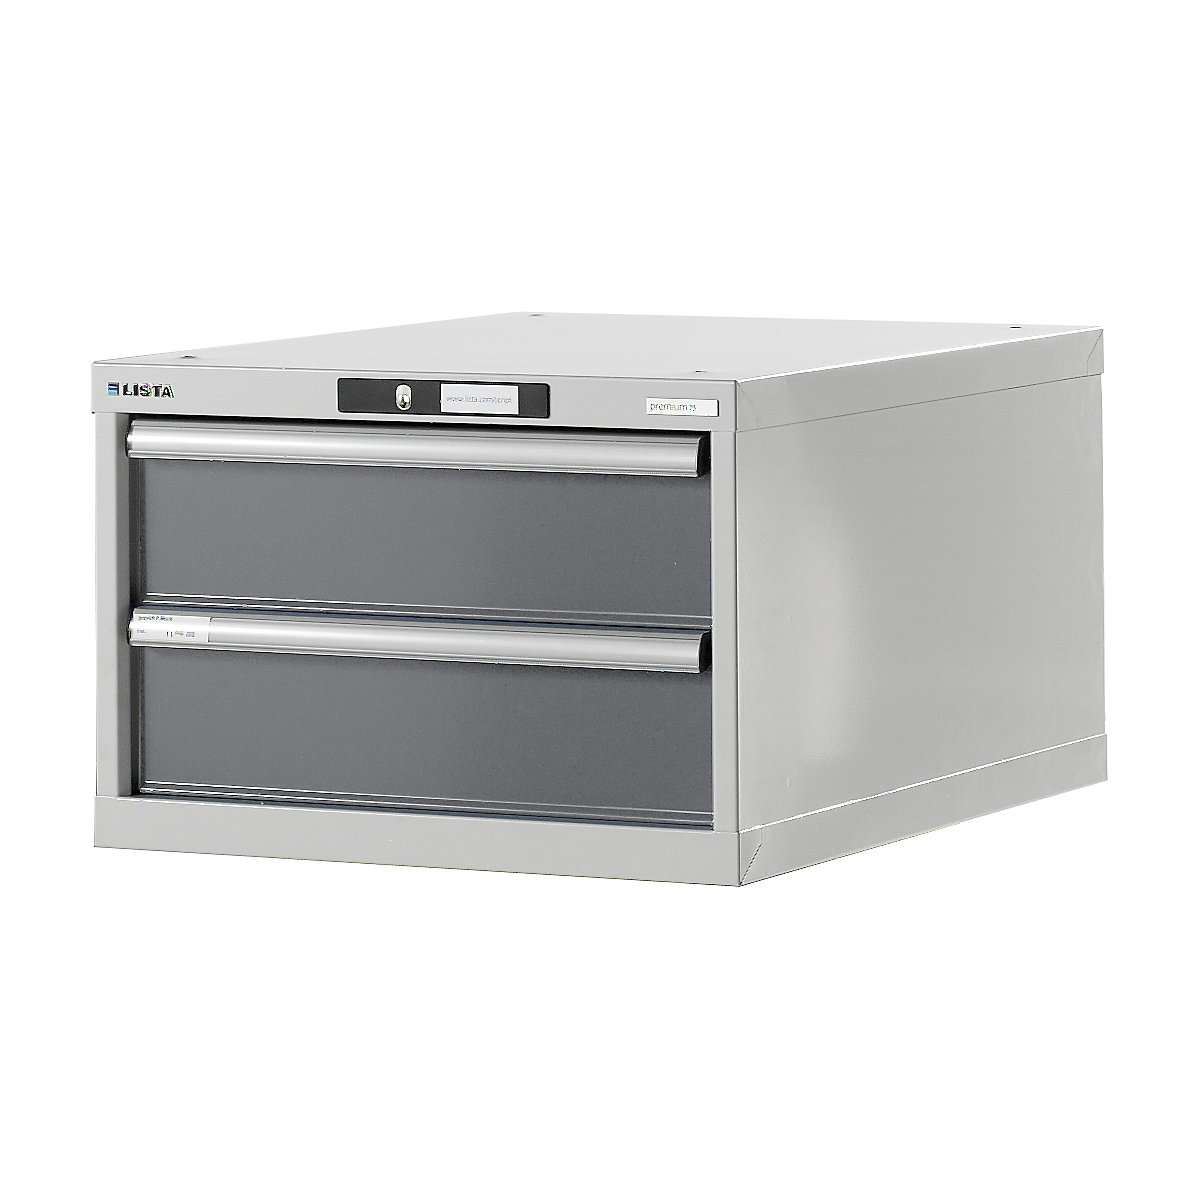 Modular workbench system, drawer unit – LISTA